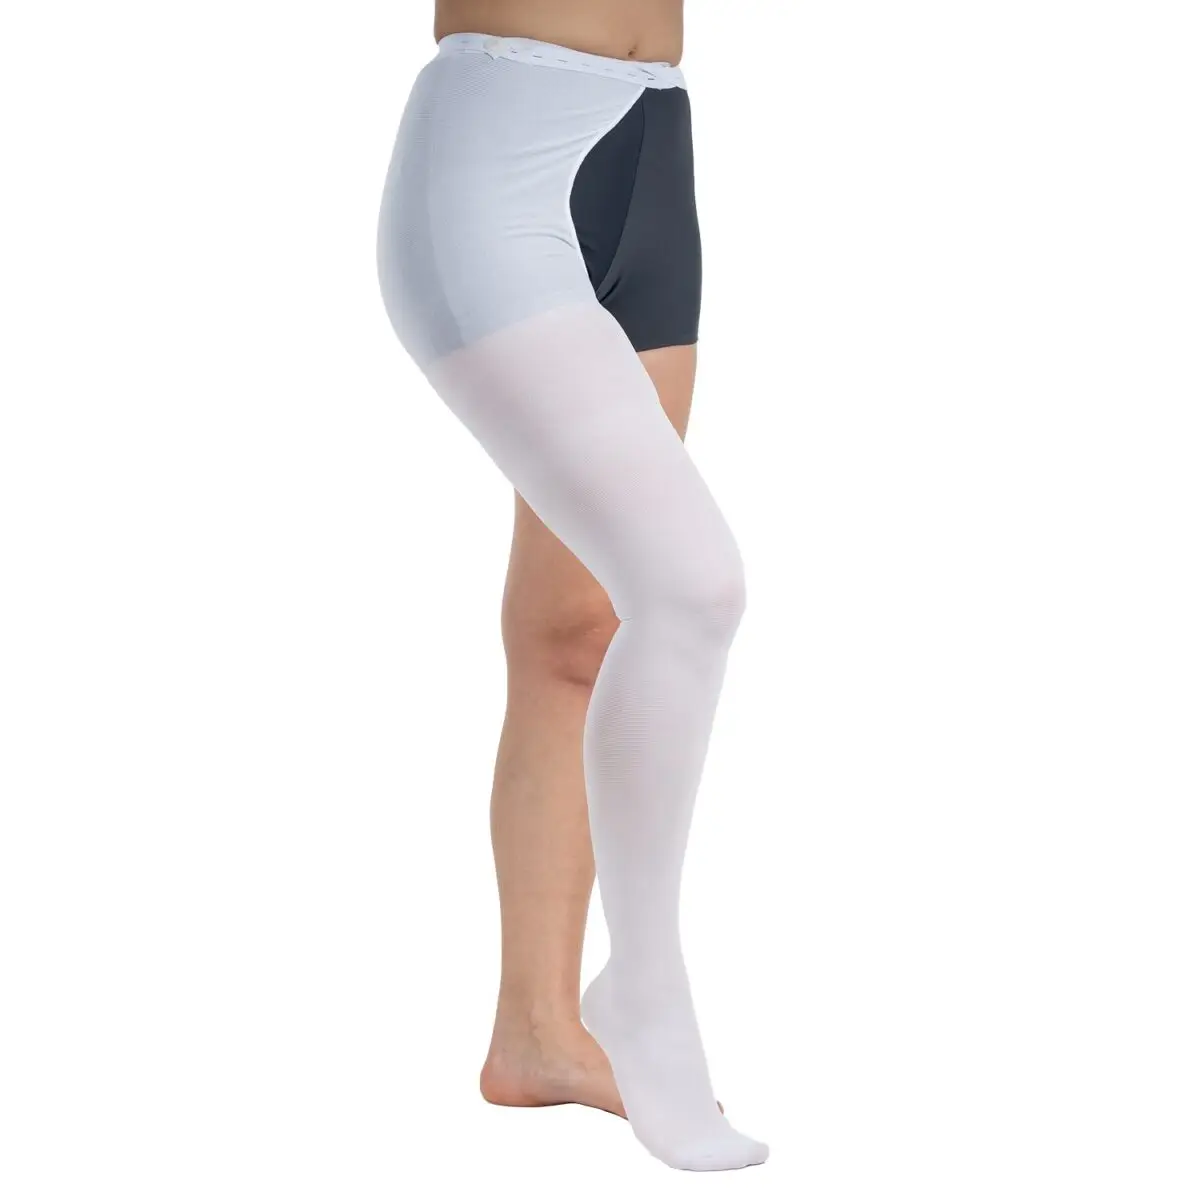 Health Shine Anti Embolism Stockings Thigh Length HS – 511 Medium